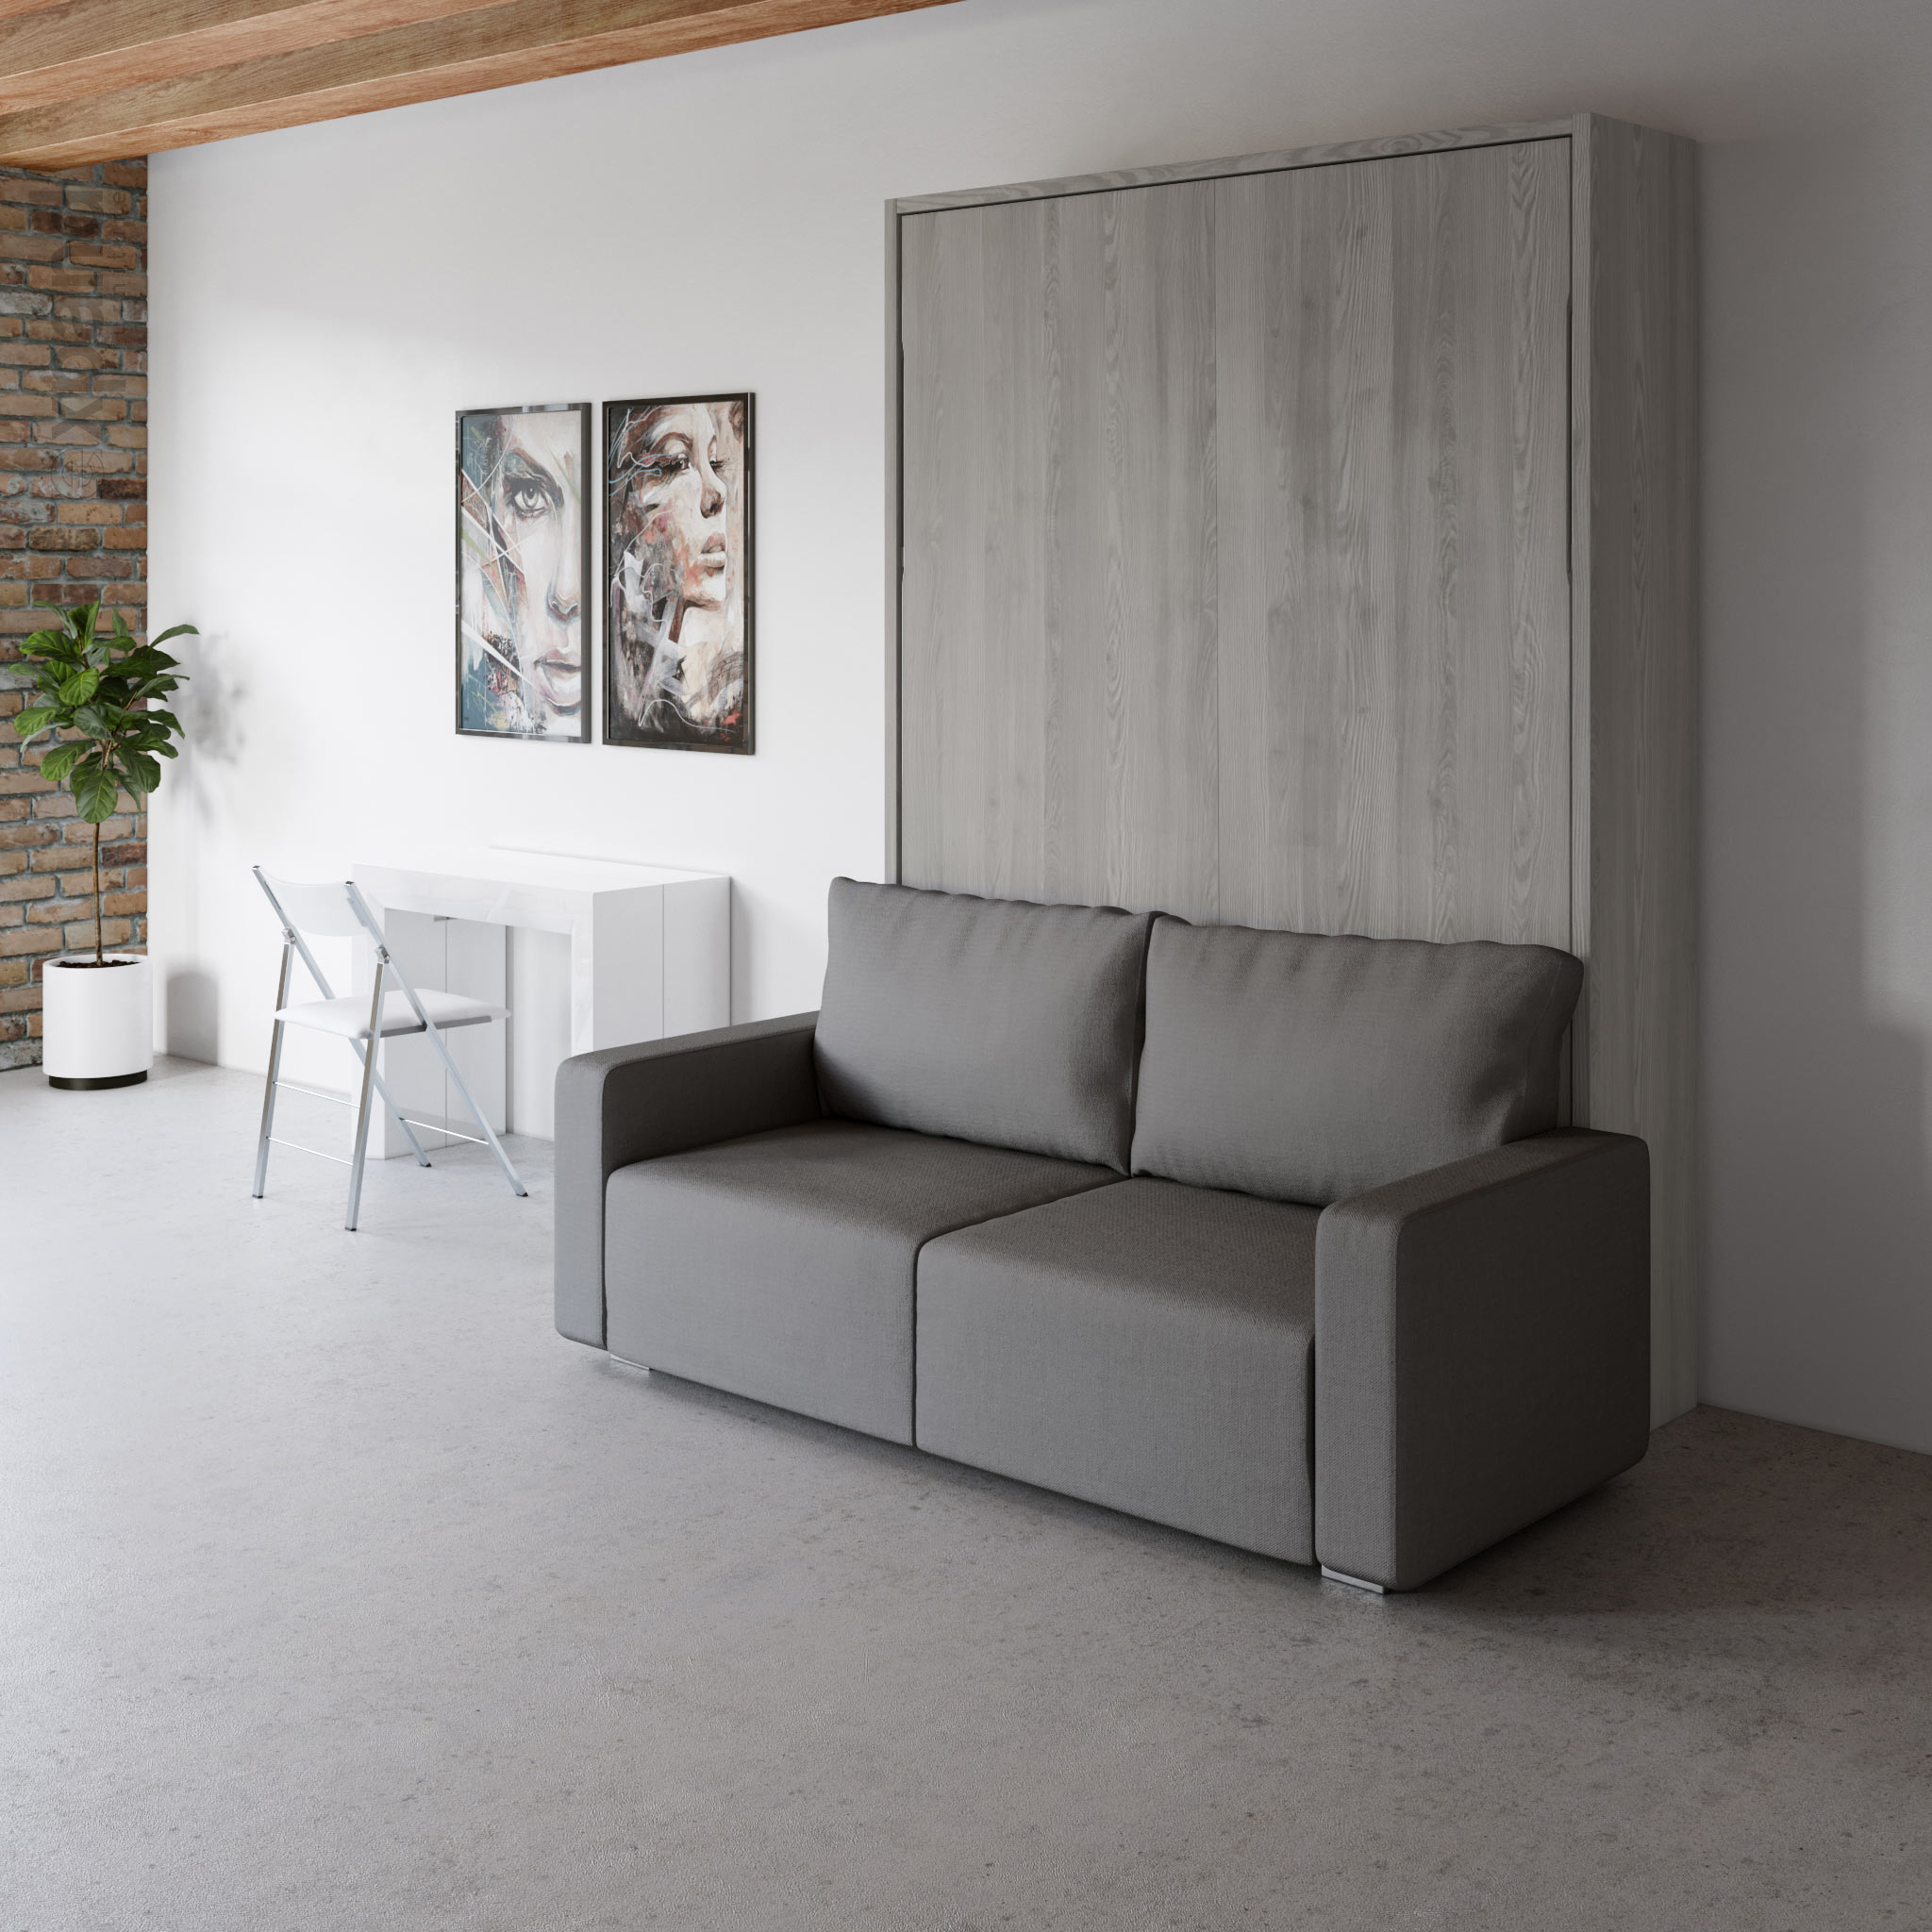 Murphysofa Clean Expand Furniture, Wall Folding Beds With Sofa